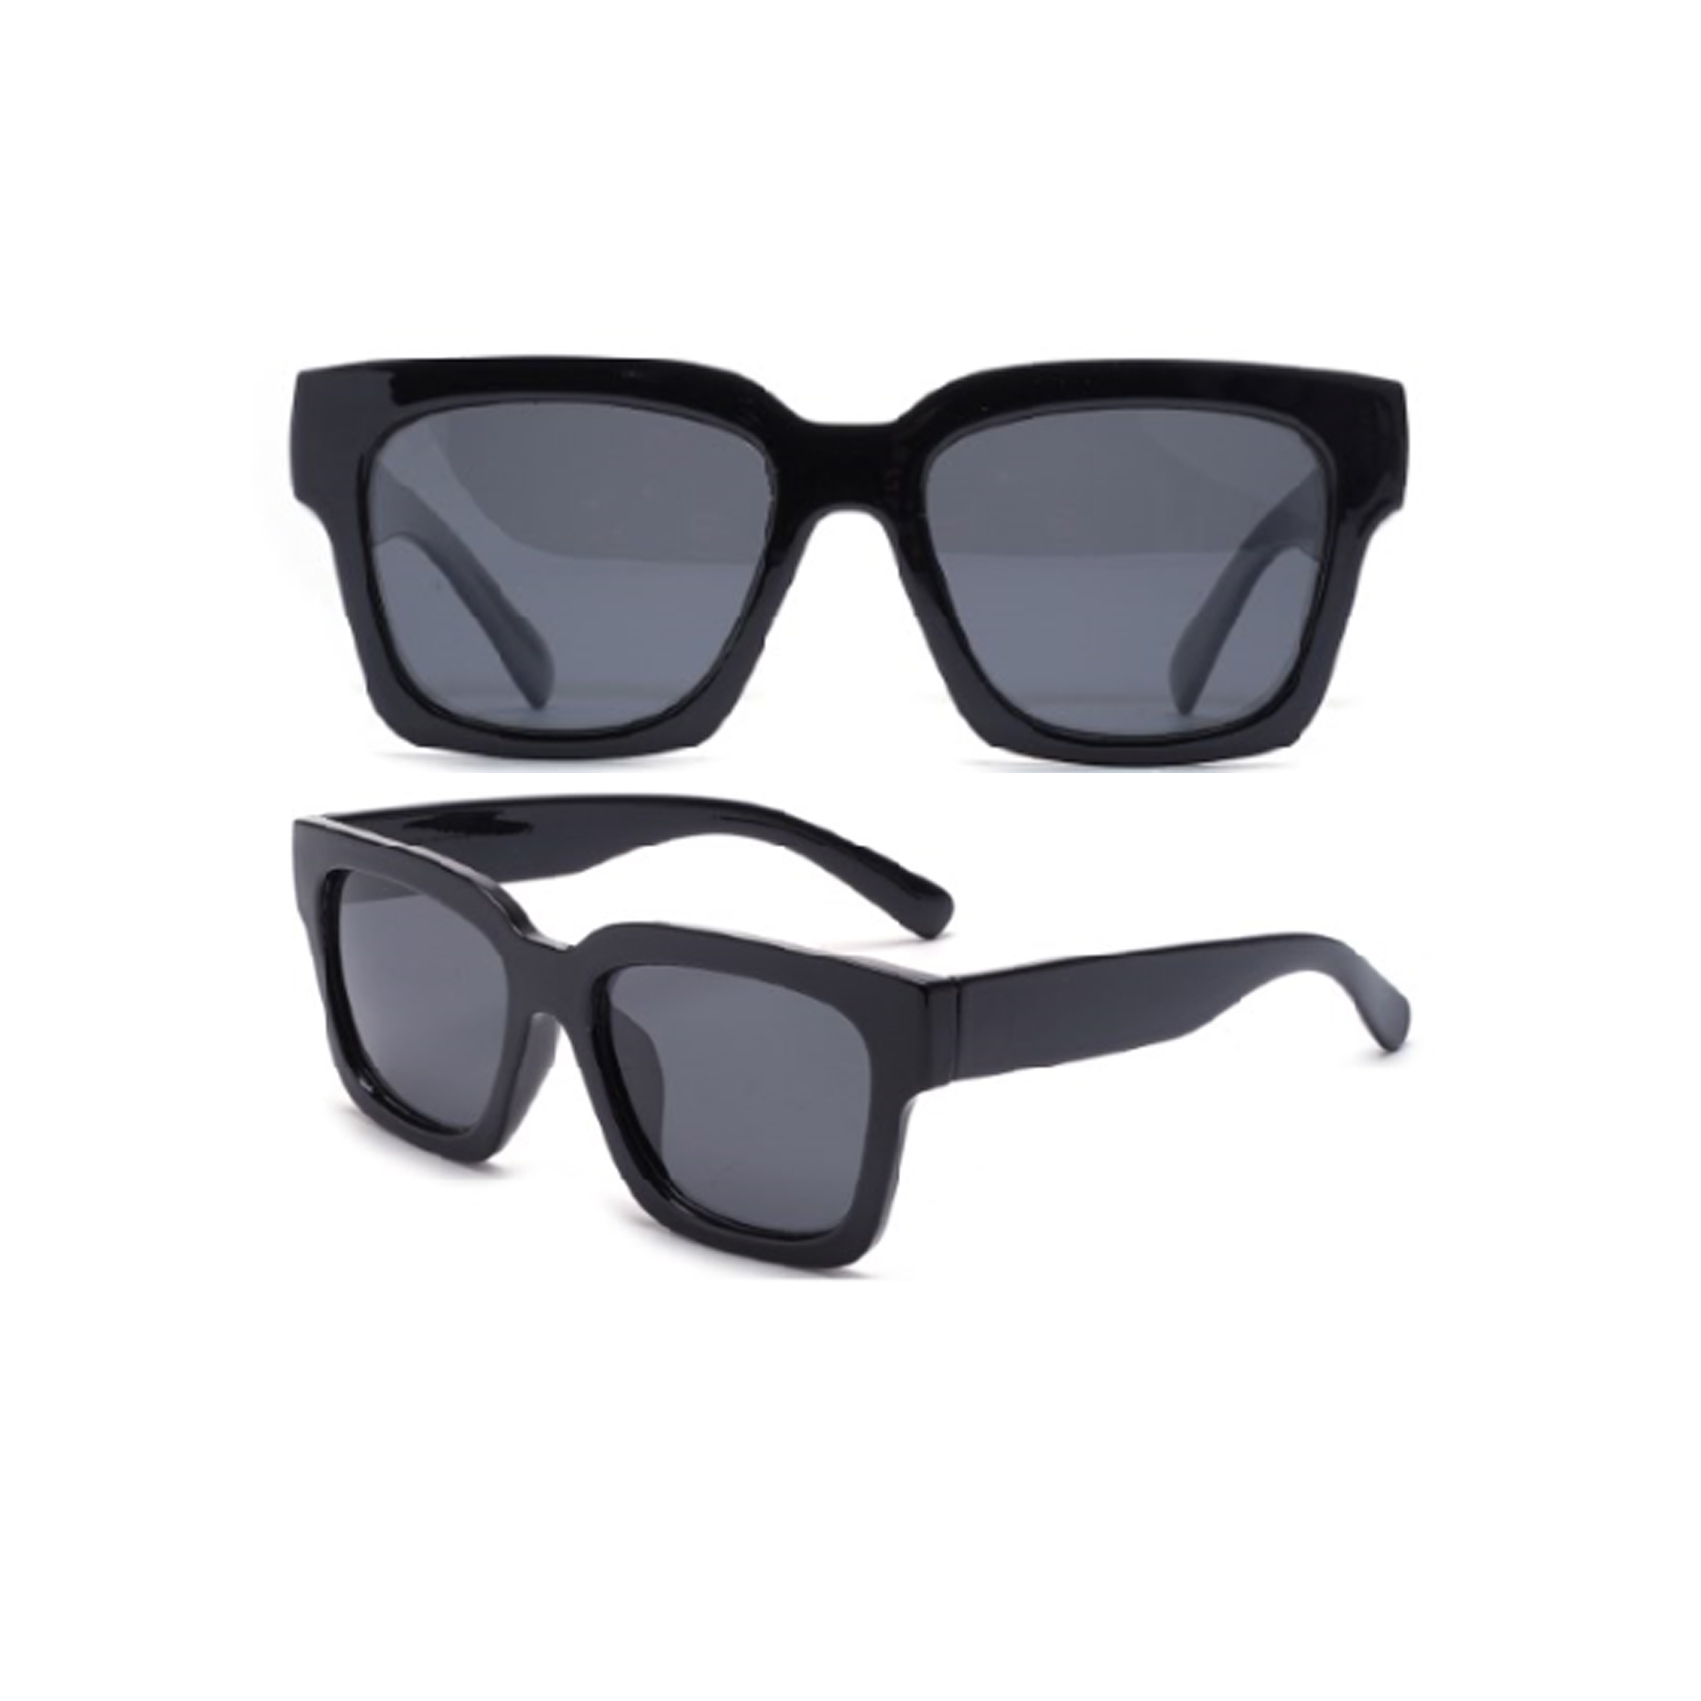 Classic Retro Black Squared Sunglasses	Brand Sunglasses Wholesale